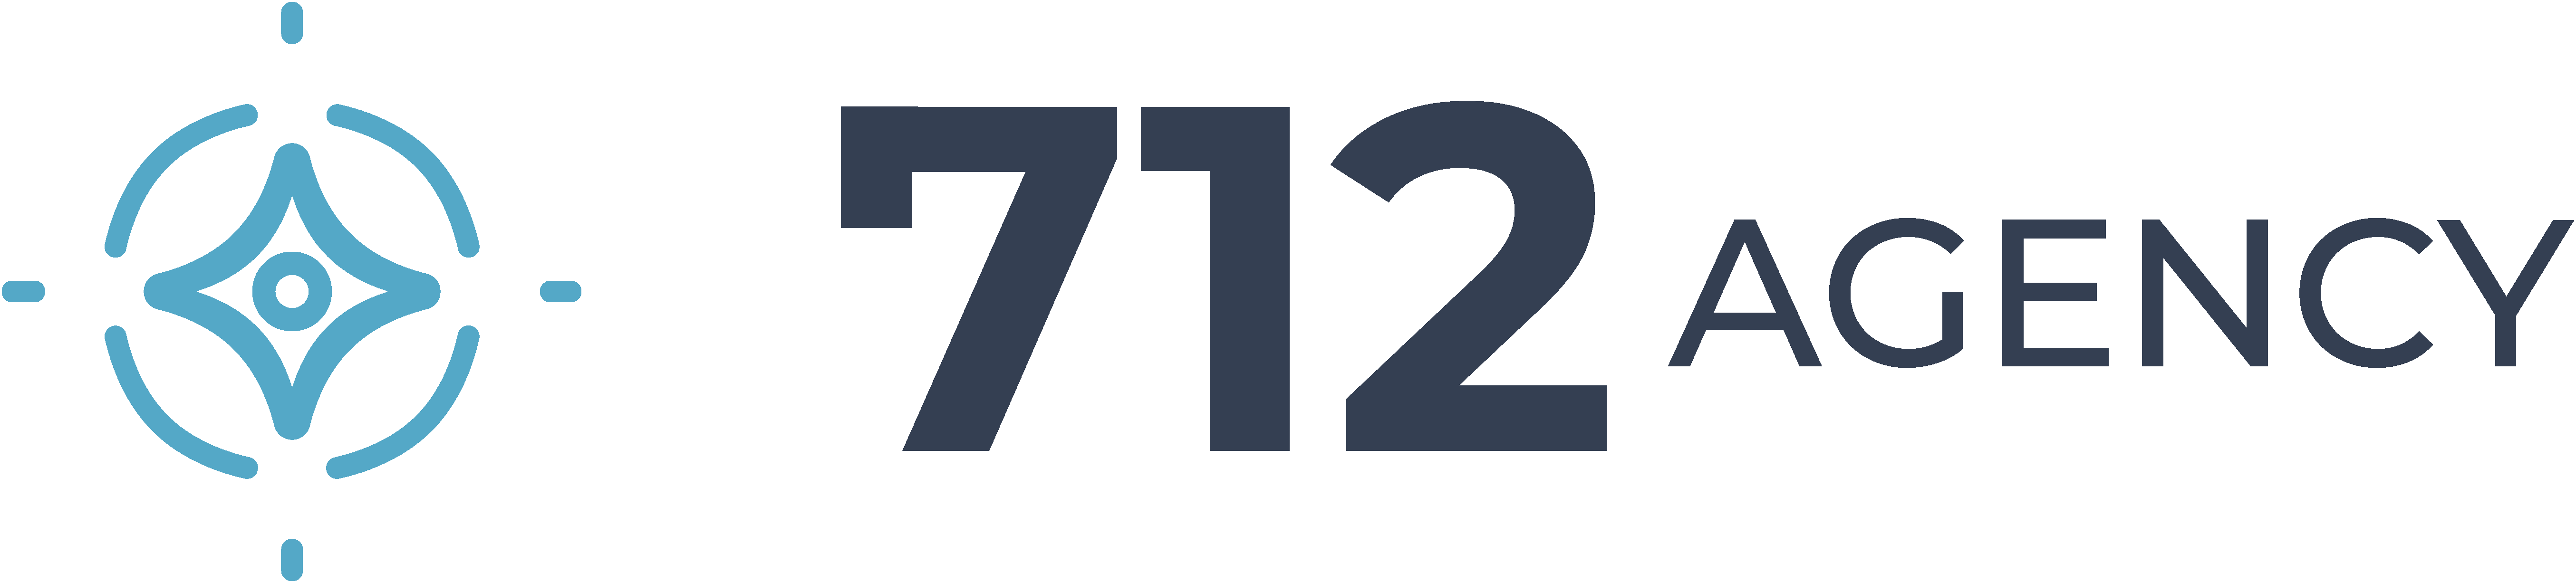 logo du partenaire 712 agency